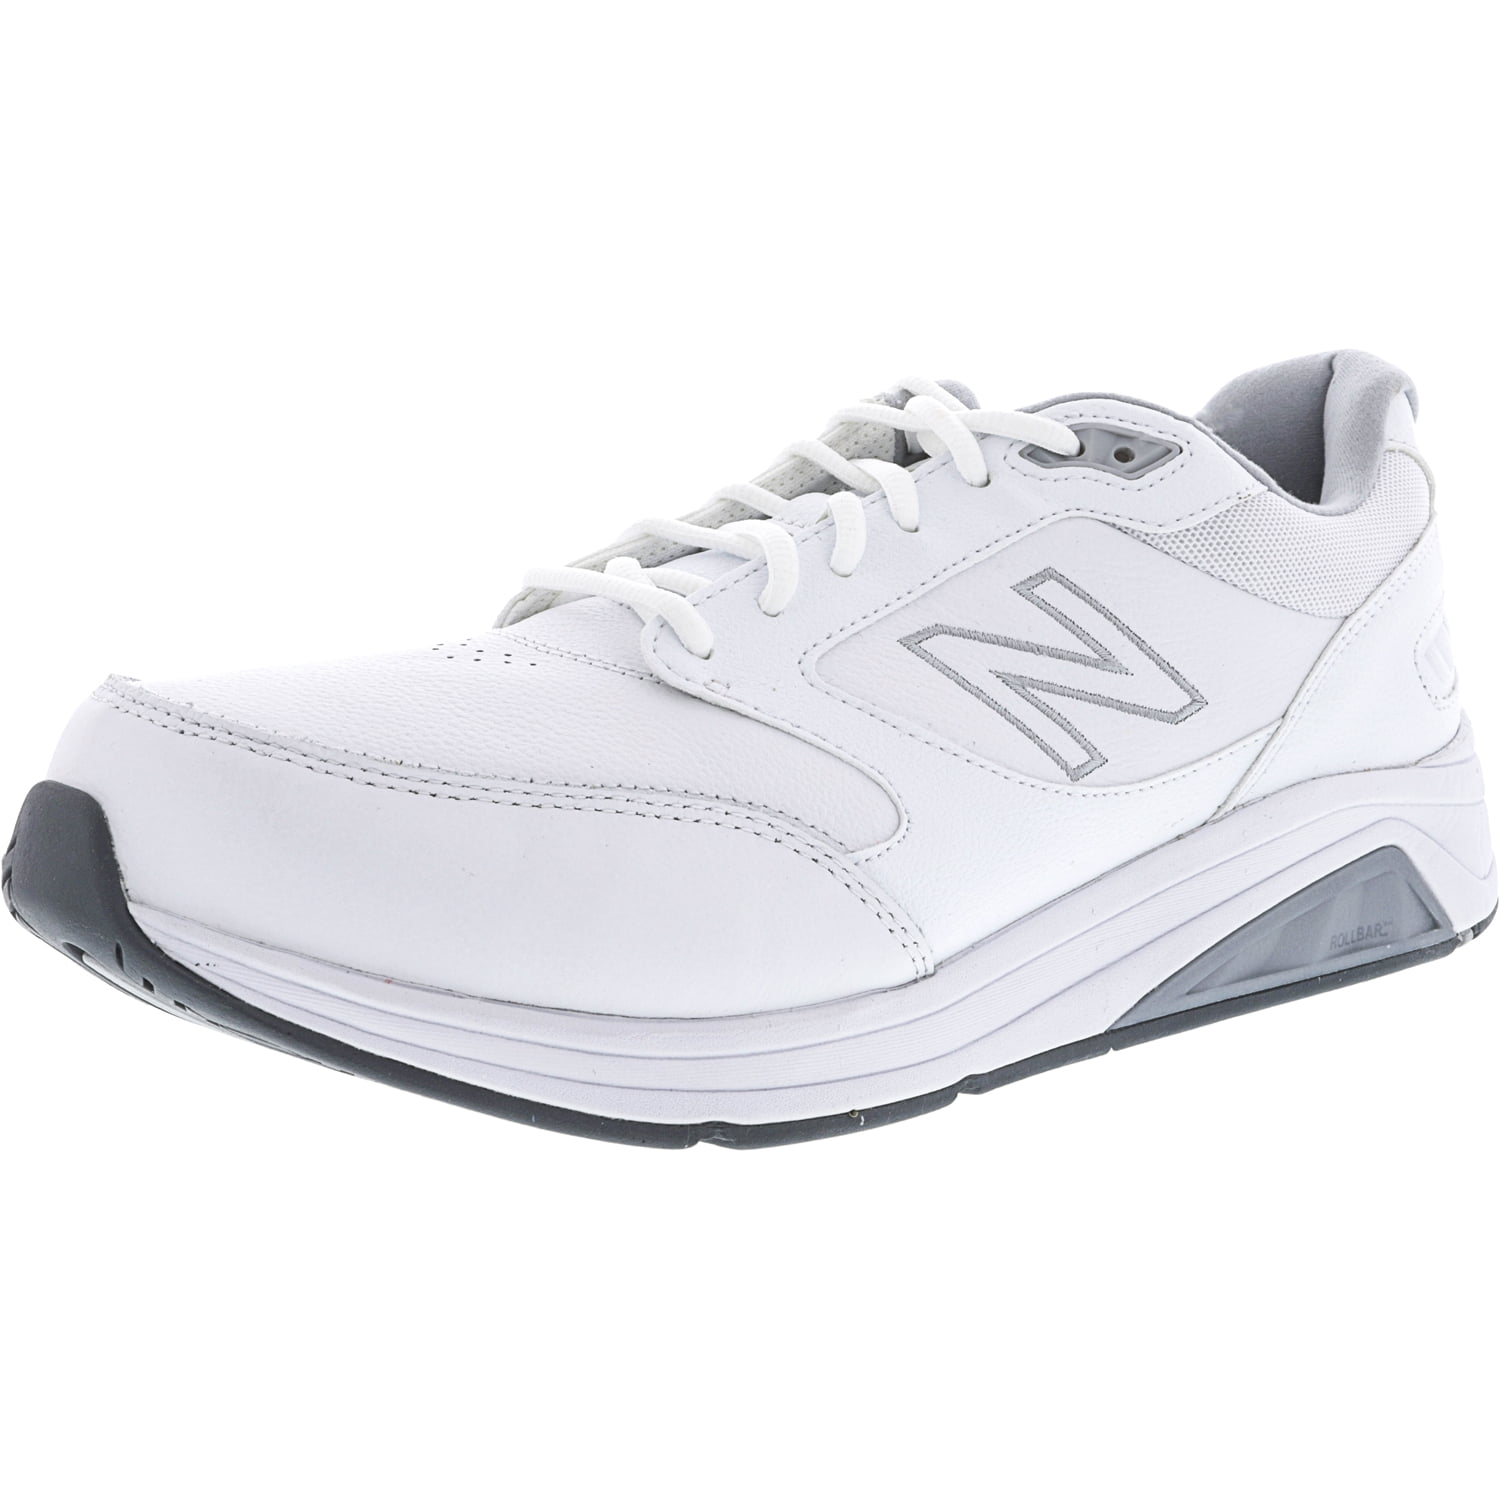 New Balance Men's Mw928 Wt2 Ankle-High Walking Shoe - 9.5M - Walmart.com